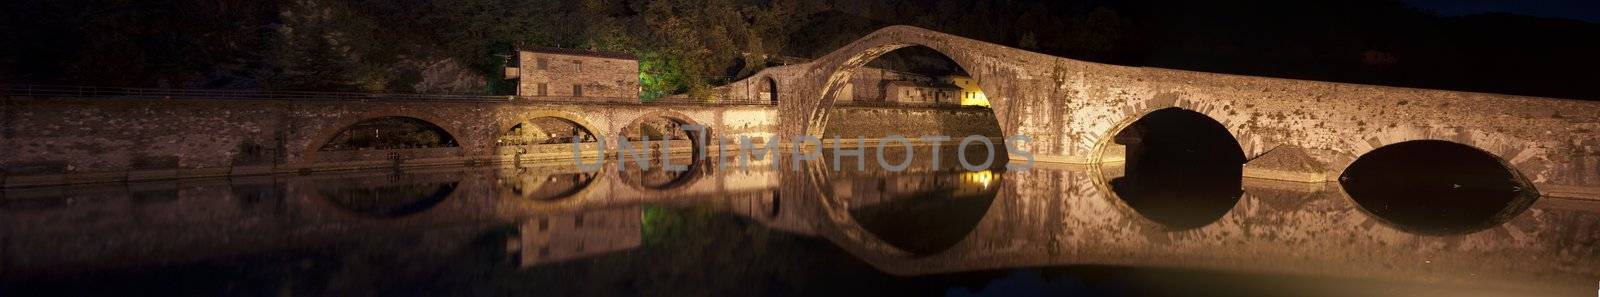 Devils Bridge at Night in Lucca, Italy by jovannig